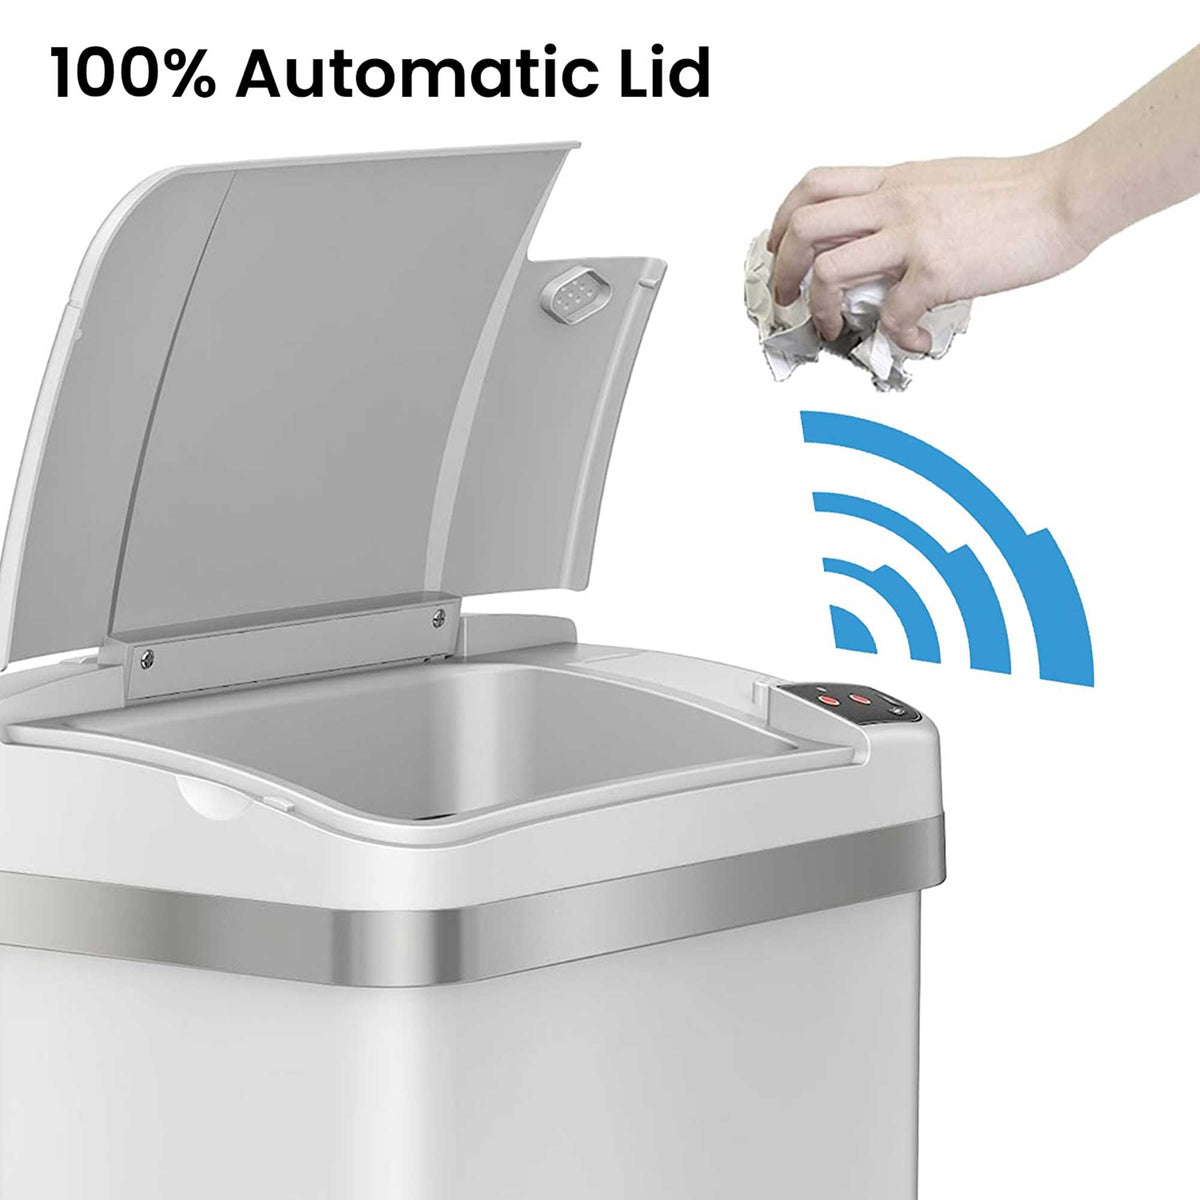 4 Gallon / 15 Liter White Sensor Bathroom Trash Can with Odor Filter and Lemon Fragrance 100% Automatic Lid